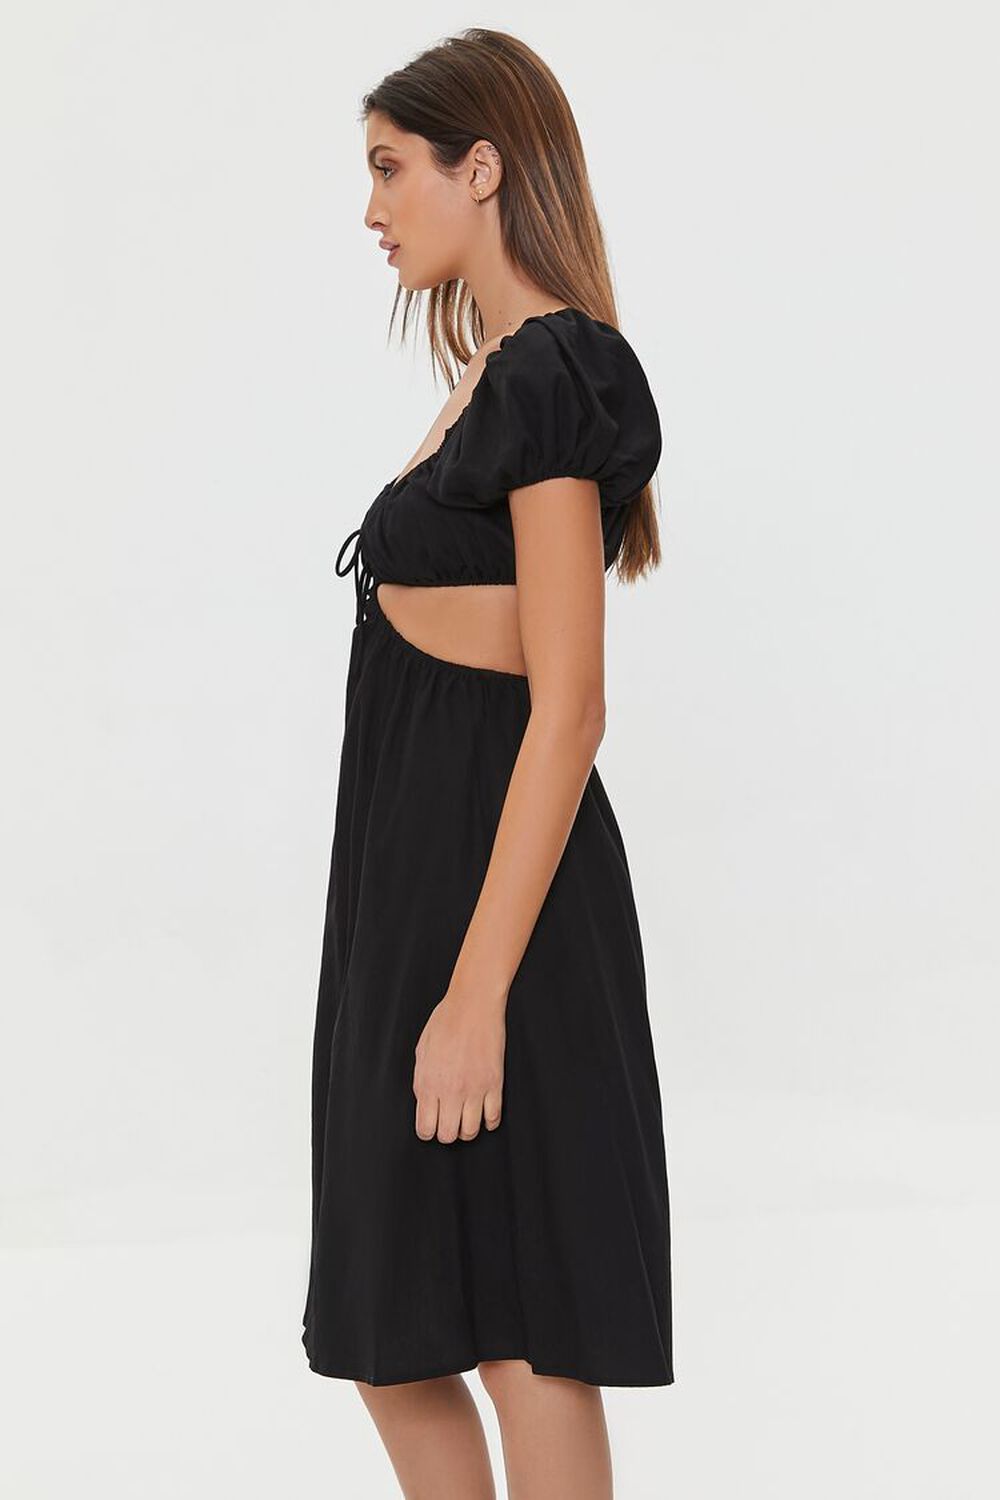 BLACK Sweetheart Cutout Midi Dress, image 2